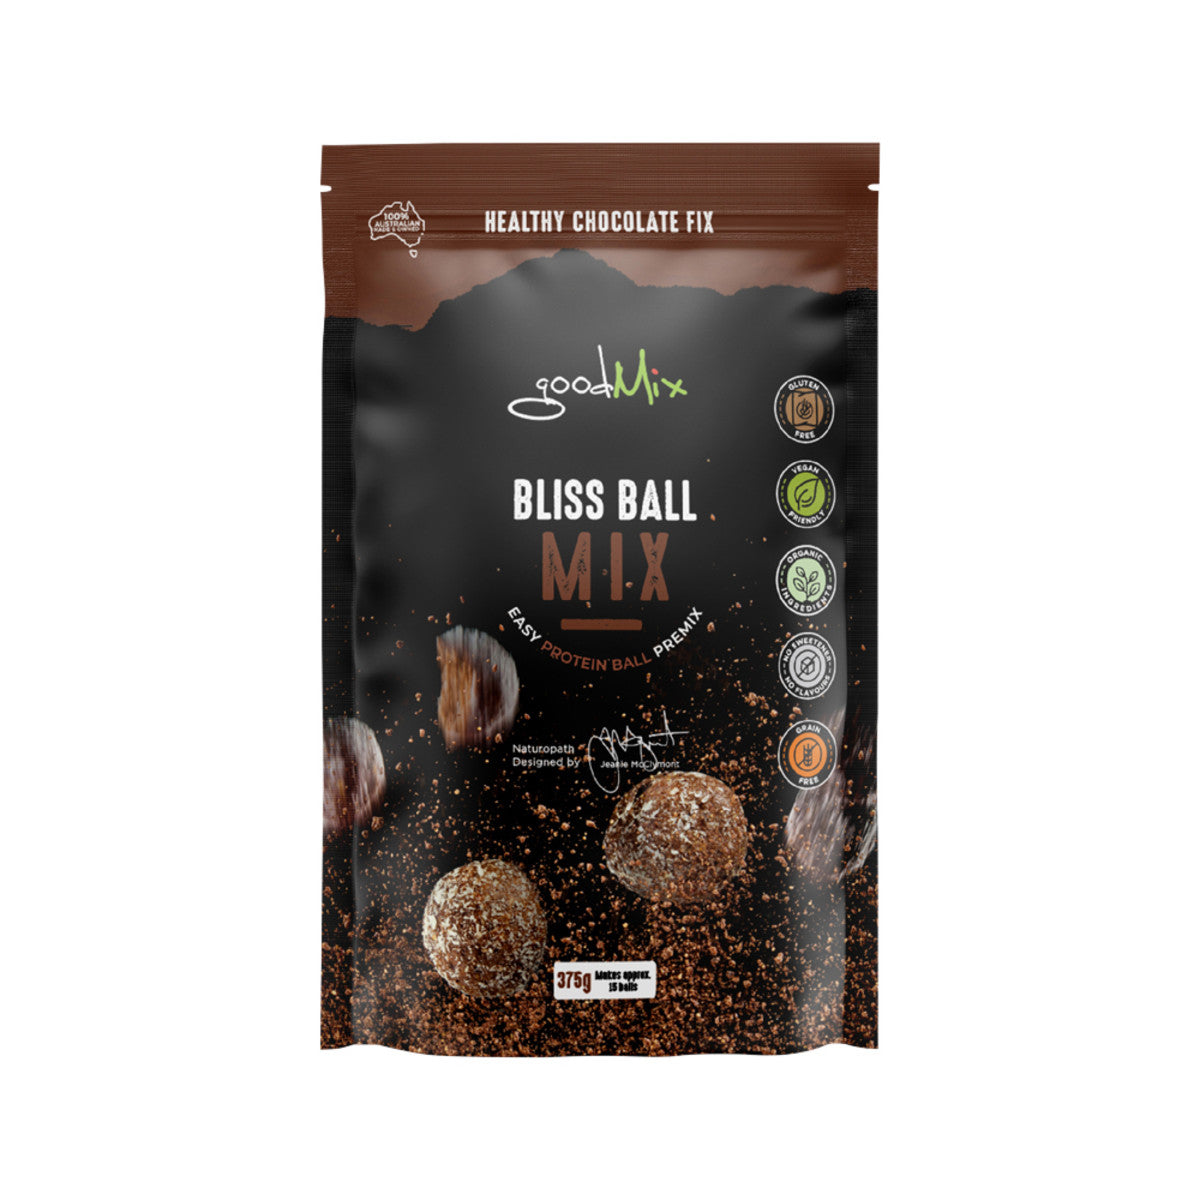 Bliss Ball Mix (Easy Vegan Protein Ball Premix) - 375g